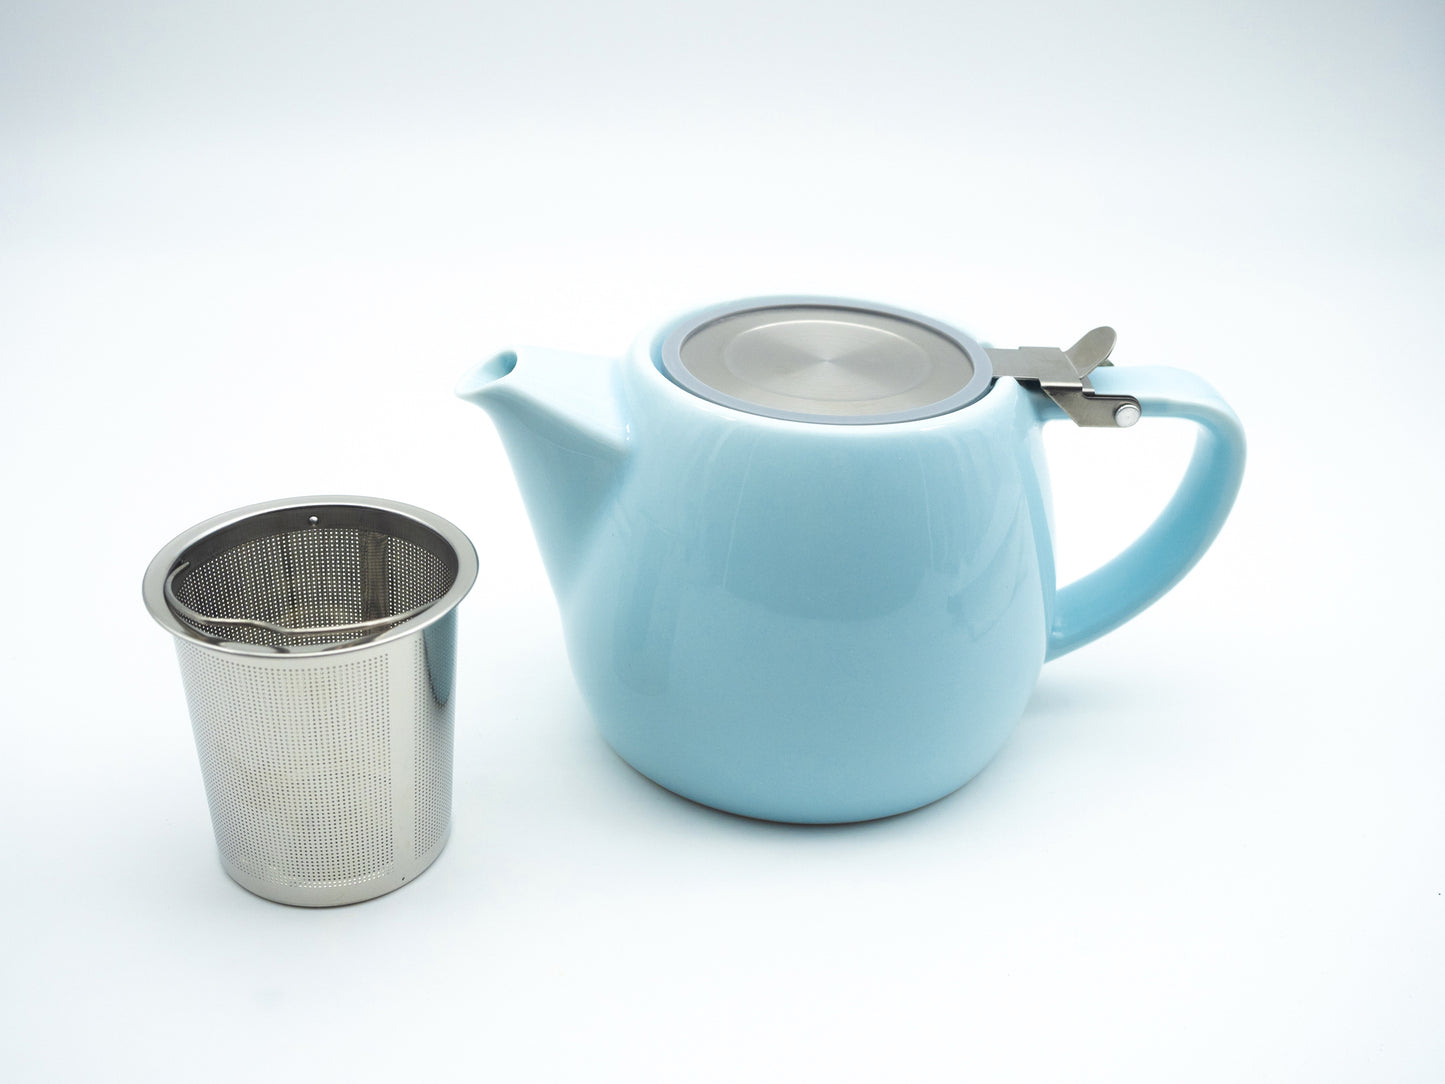 Light blue porcelain tea pot next to a stainless steel infuser basket